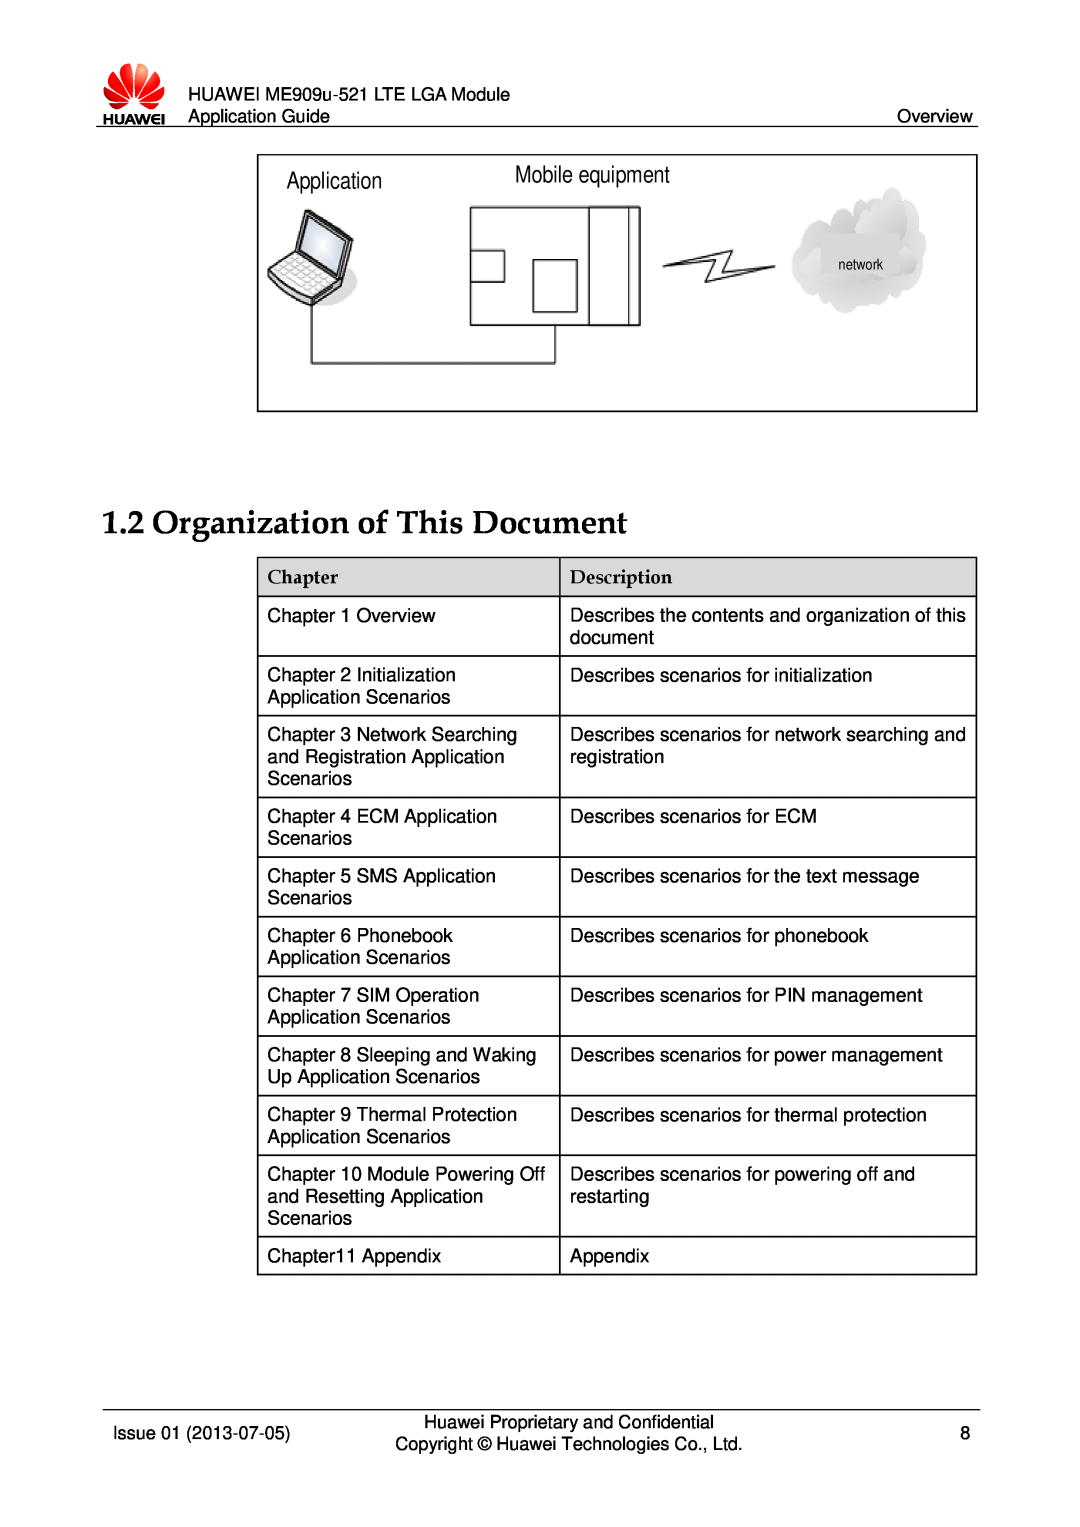 Huawei ME909u-521 manual Organization of This Document, Application, Mobile equipment 